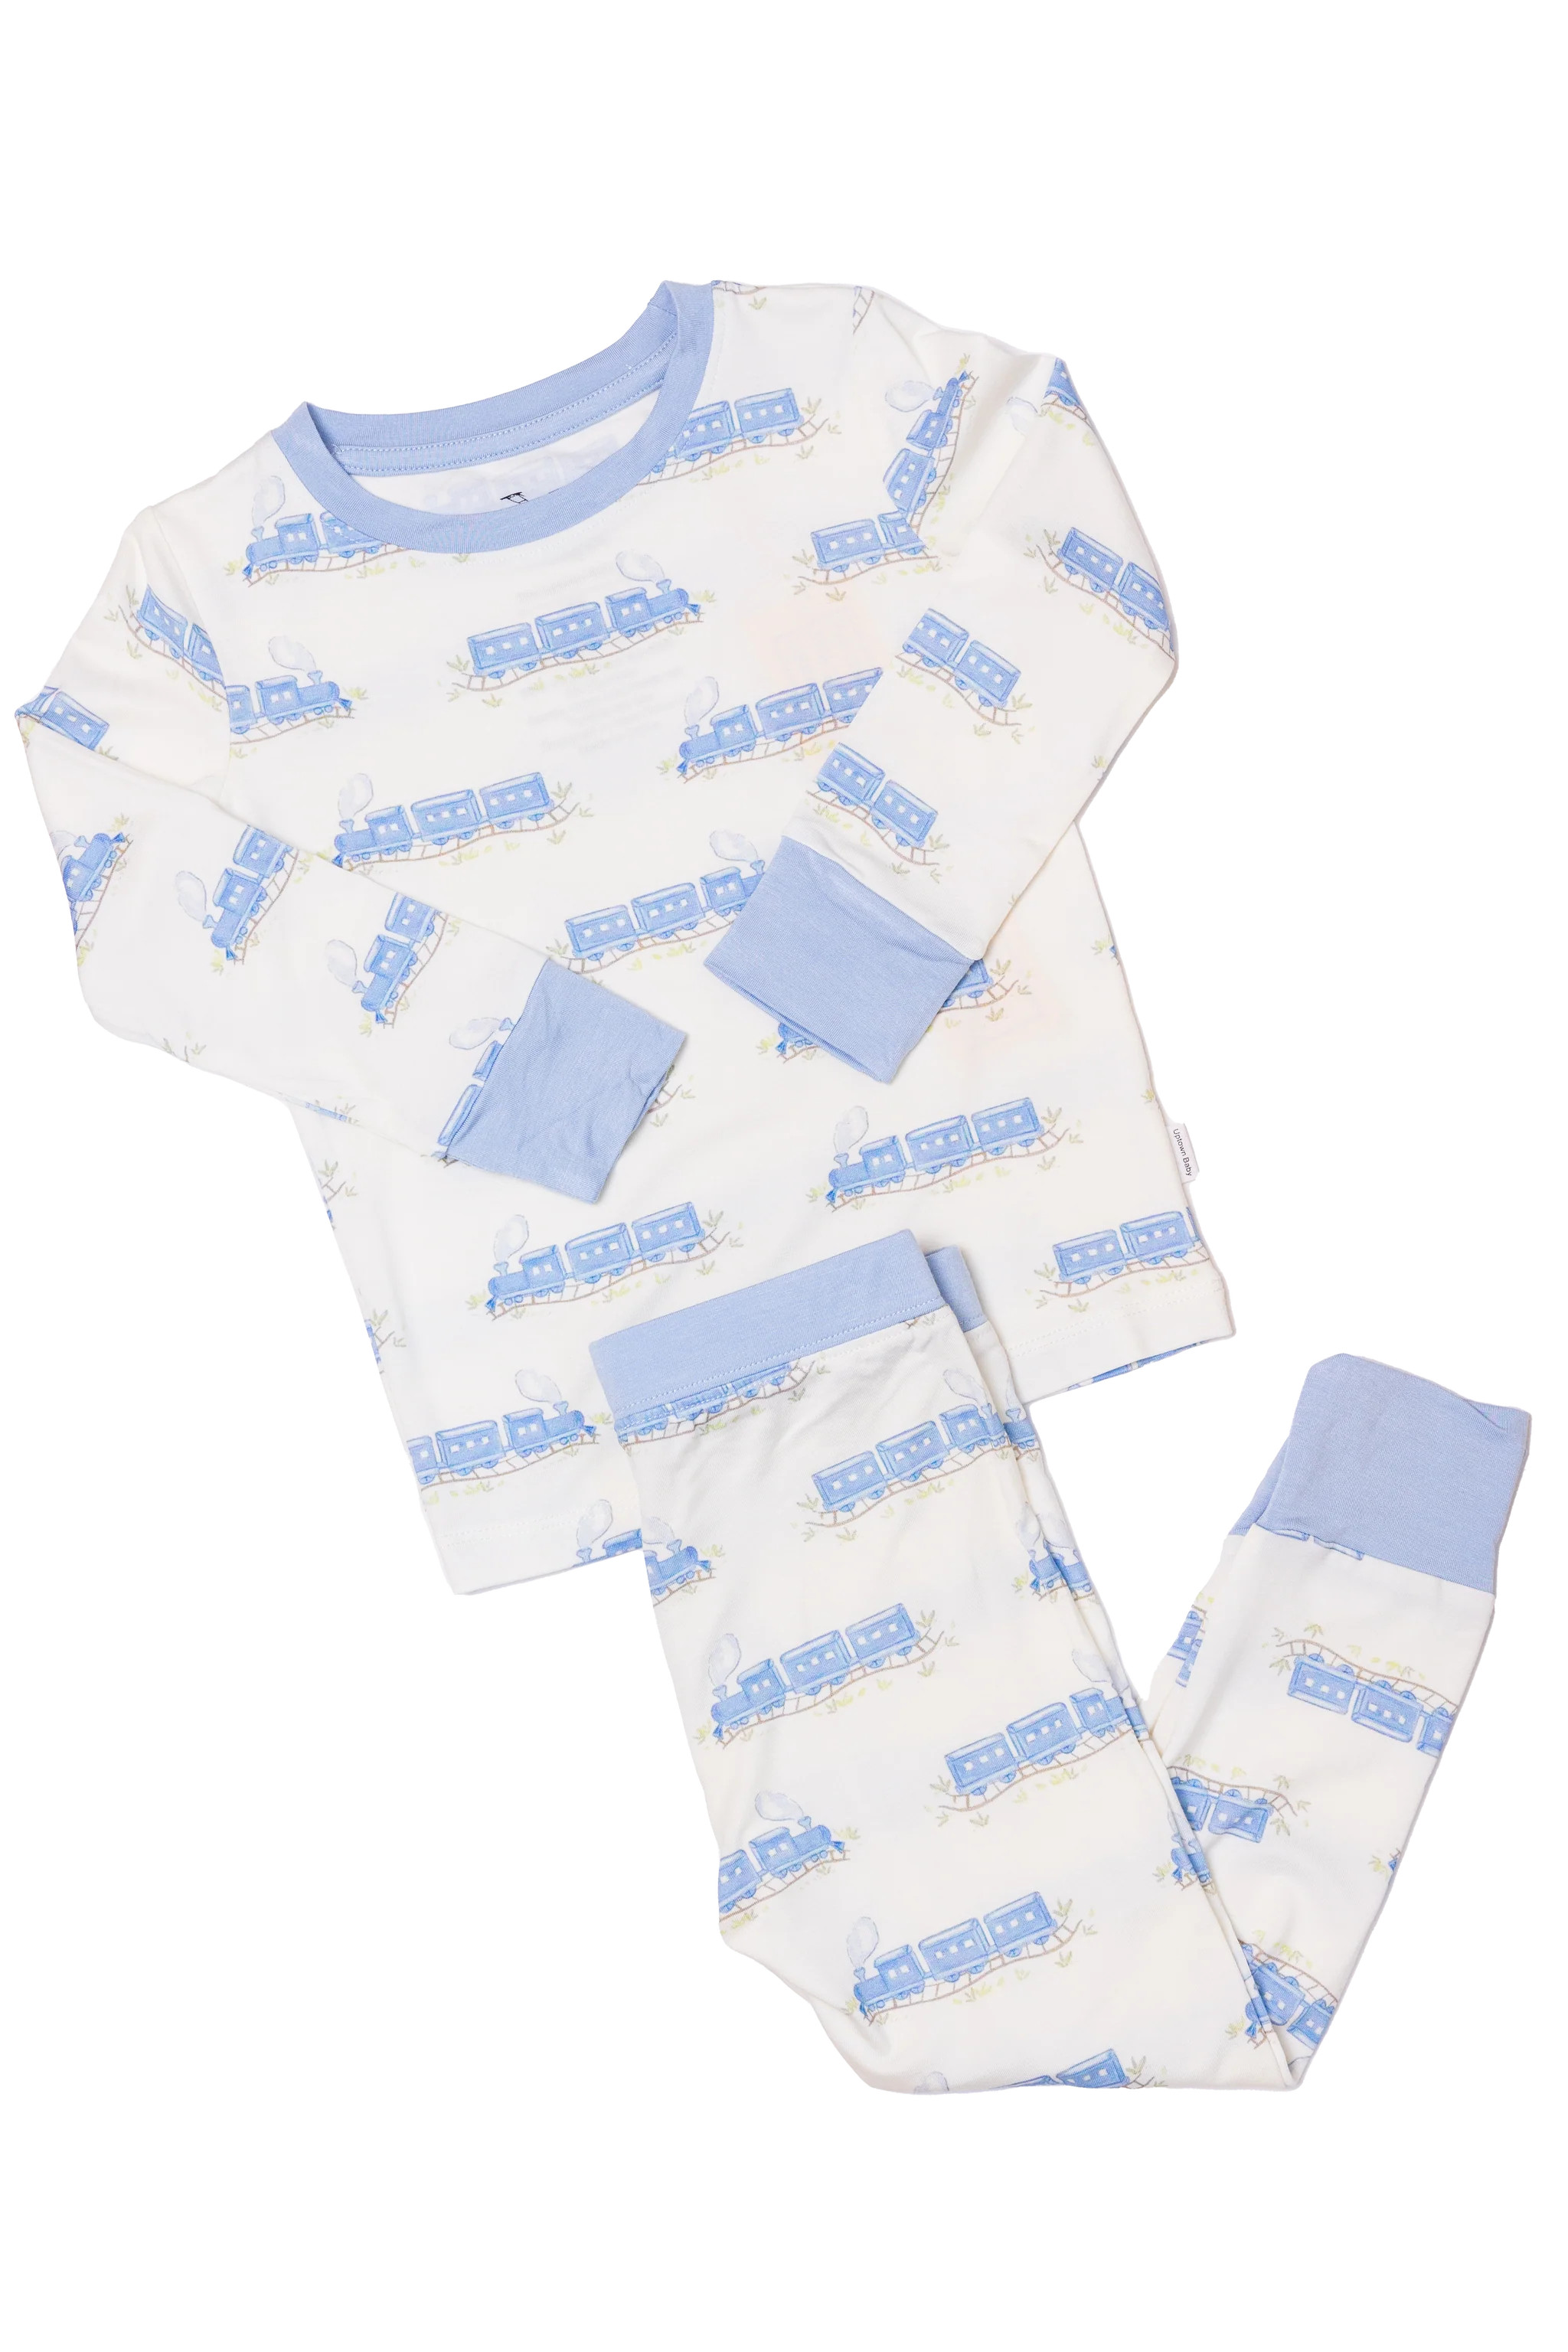 2 piece Train Pajama | The Uptown Baby